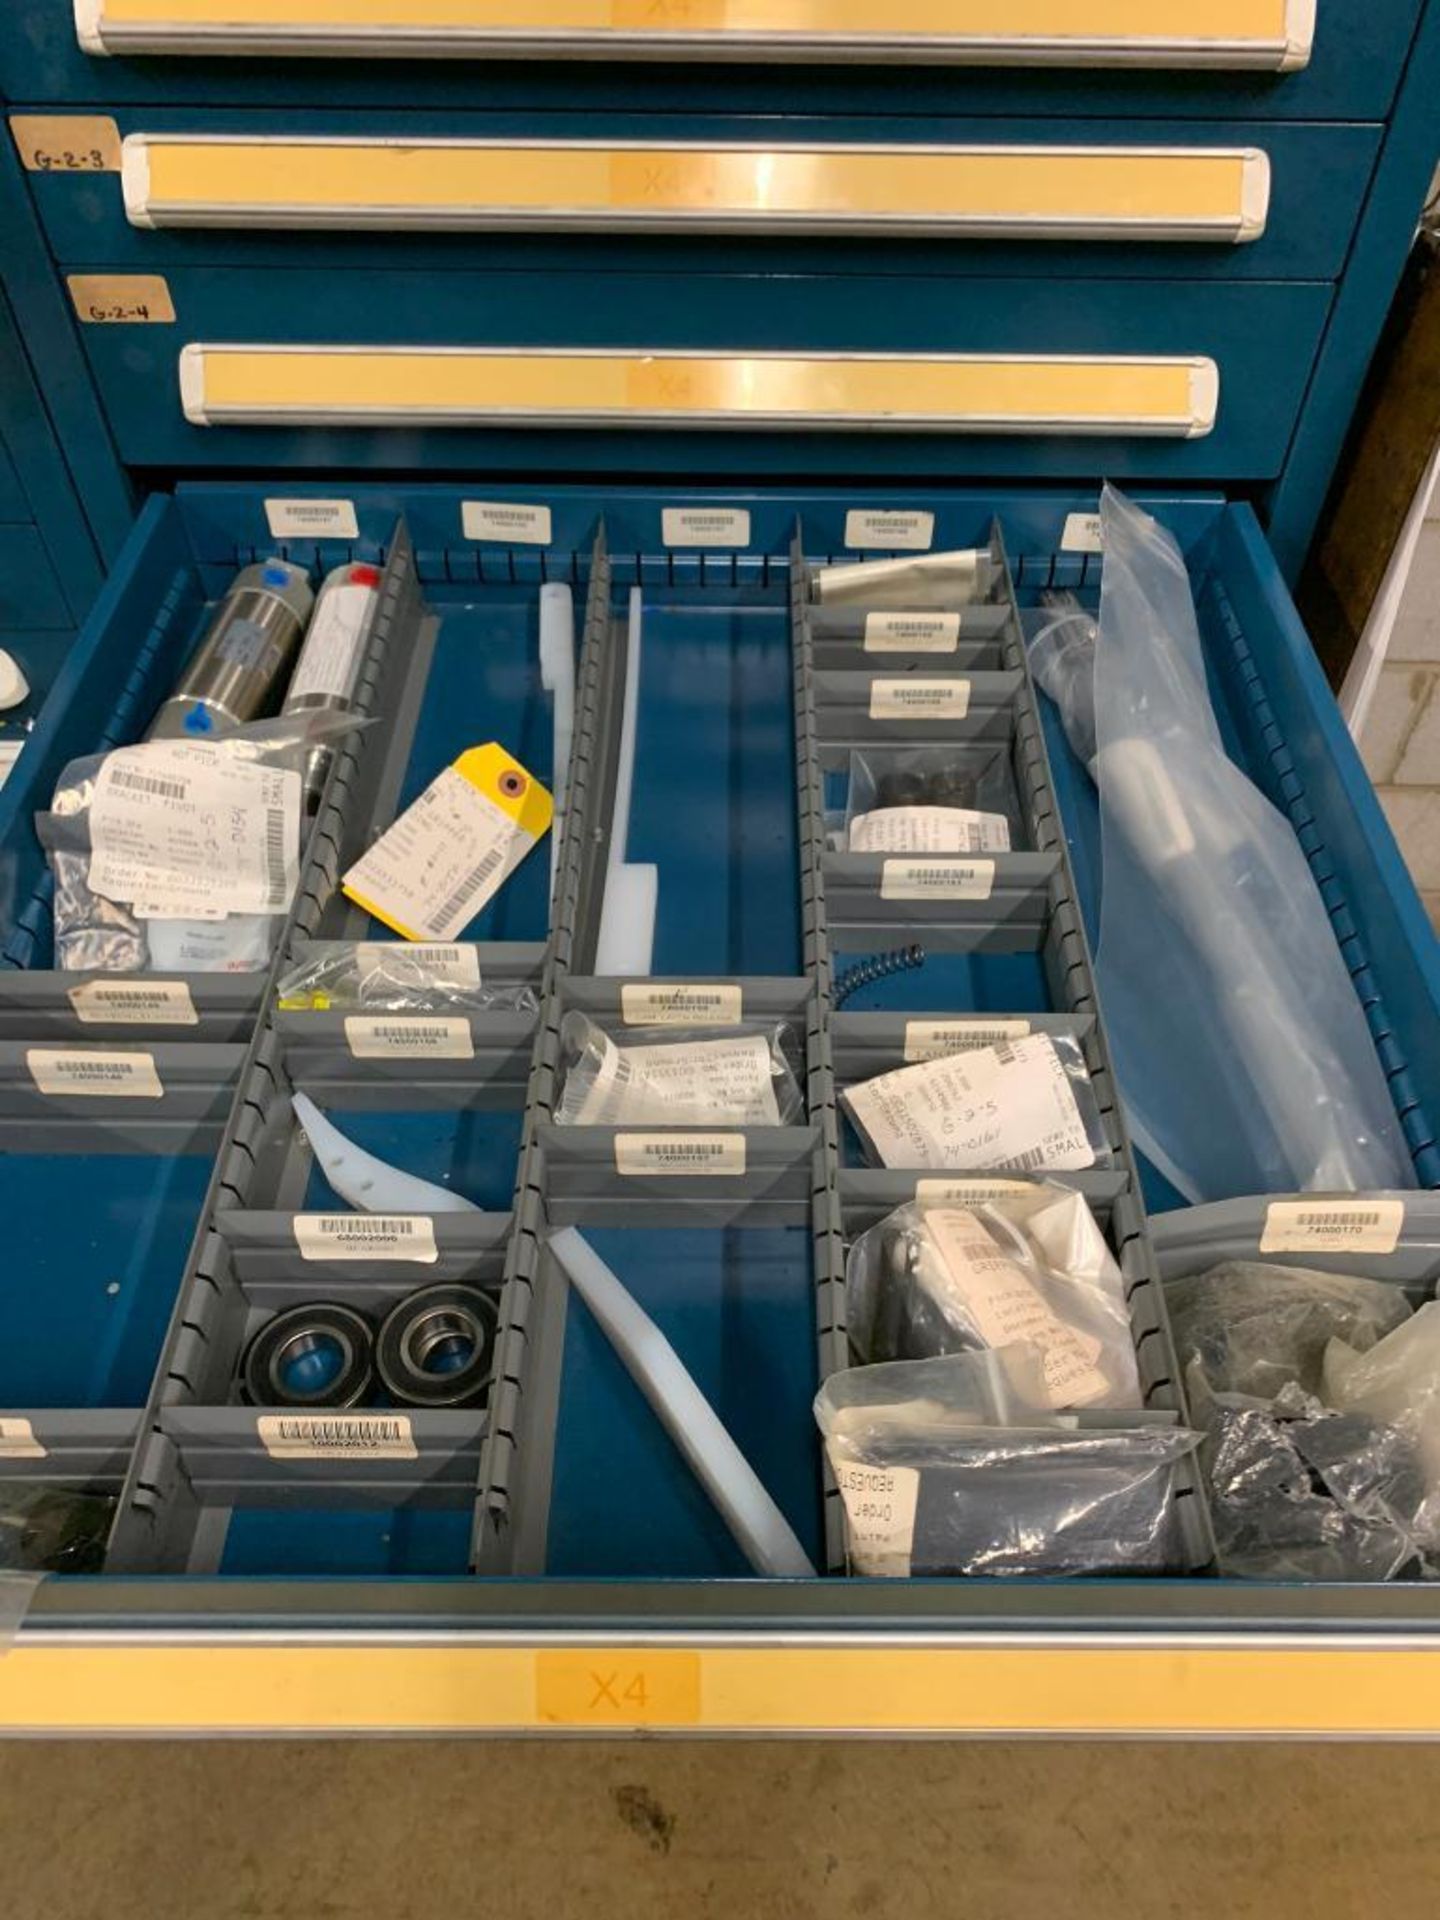 Vidmar 10-Drawer Cabinet, Vidmar Shelf Unit w/ Plant Support Content - Image 6 of 13